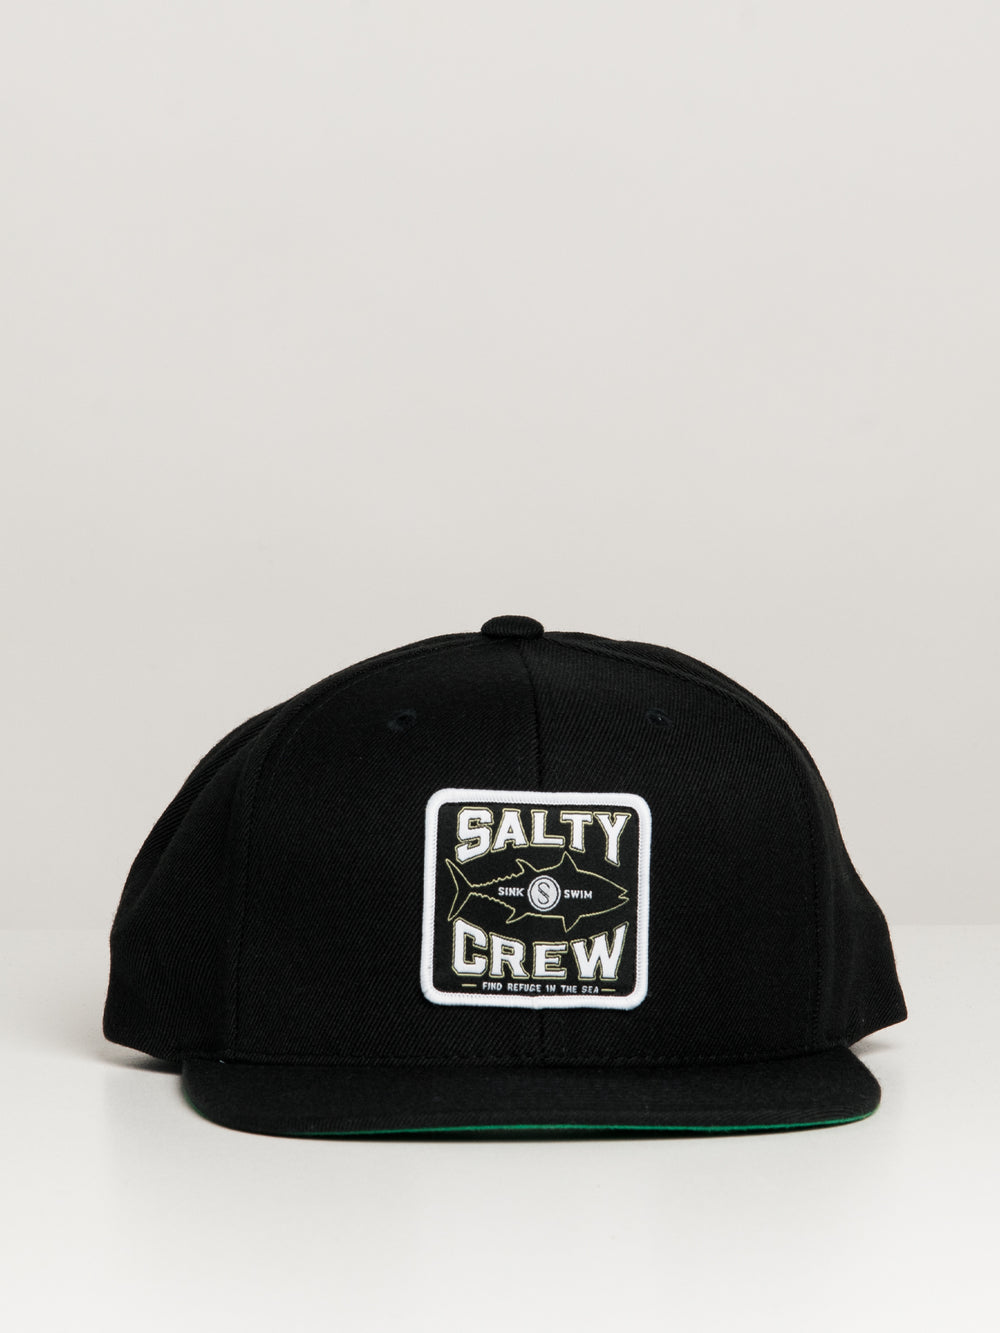 SALTY CREW TIGHT LINES 6 PANEL SNAPBACK HAT